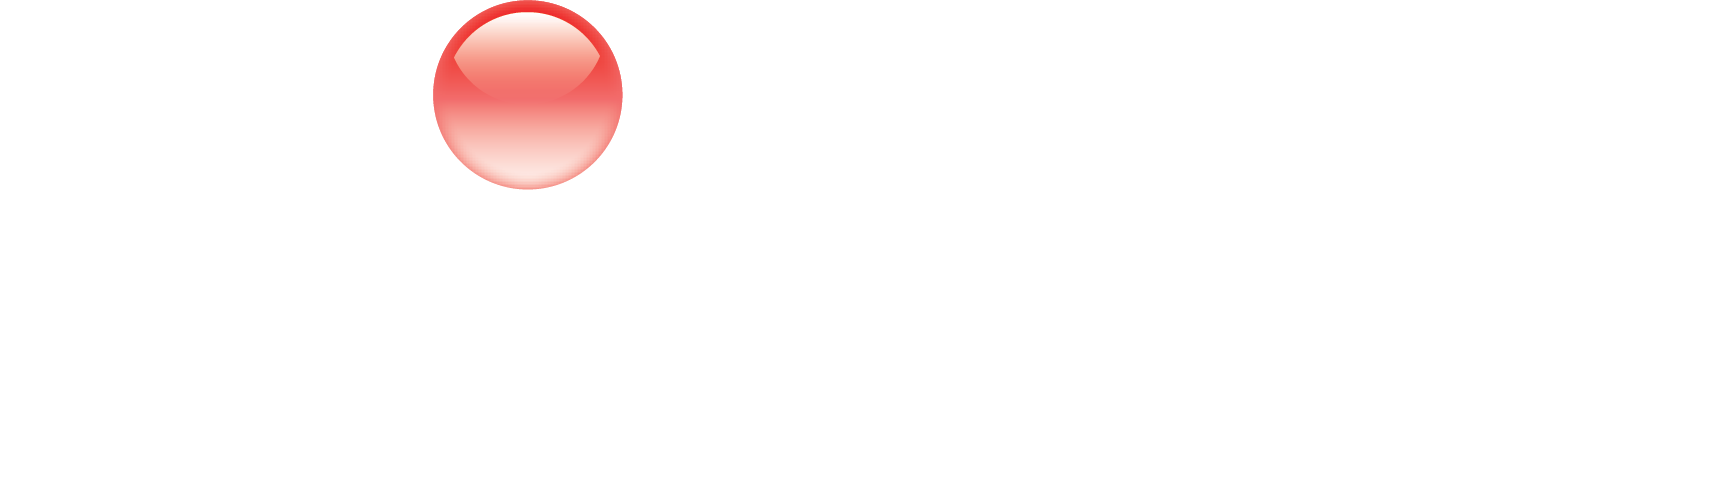 projectmates-logo-and-hexagon-white v2